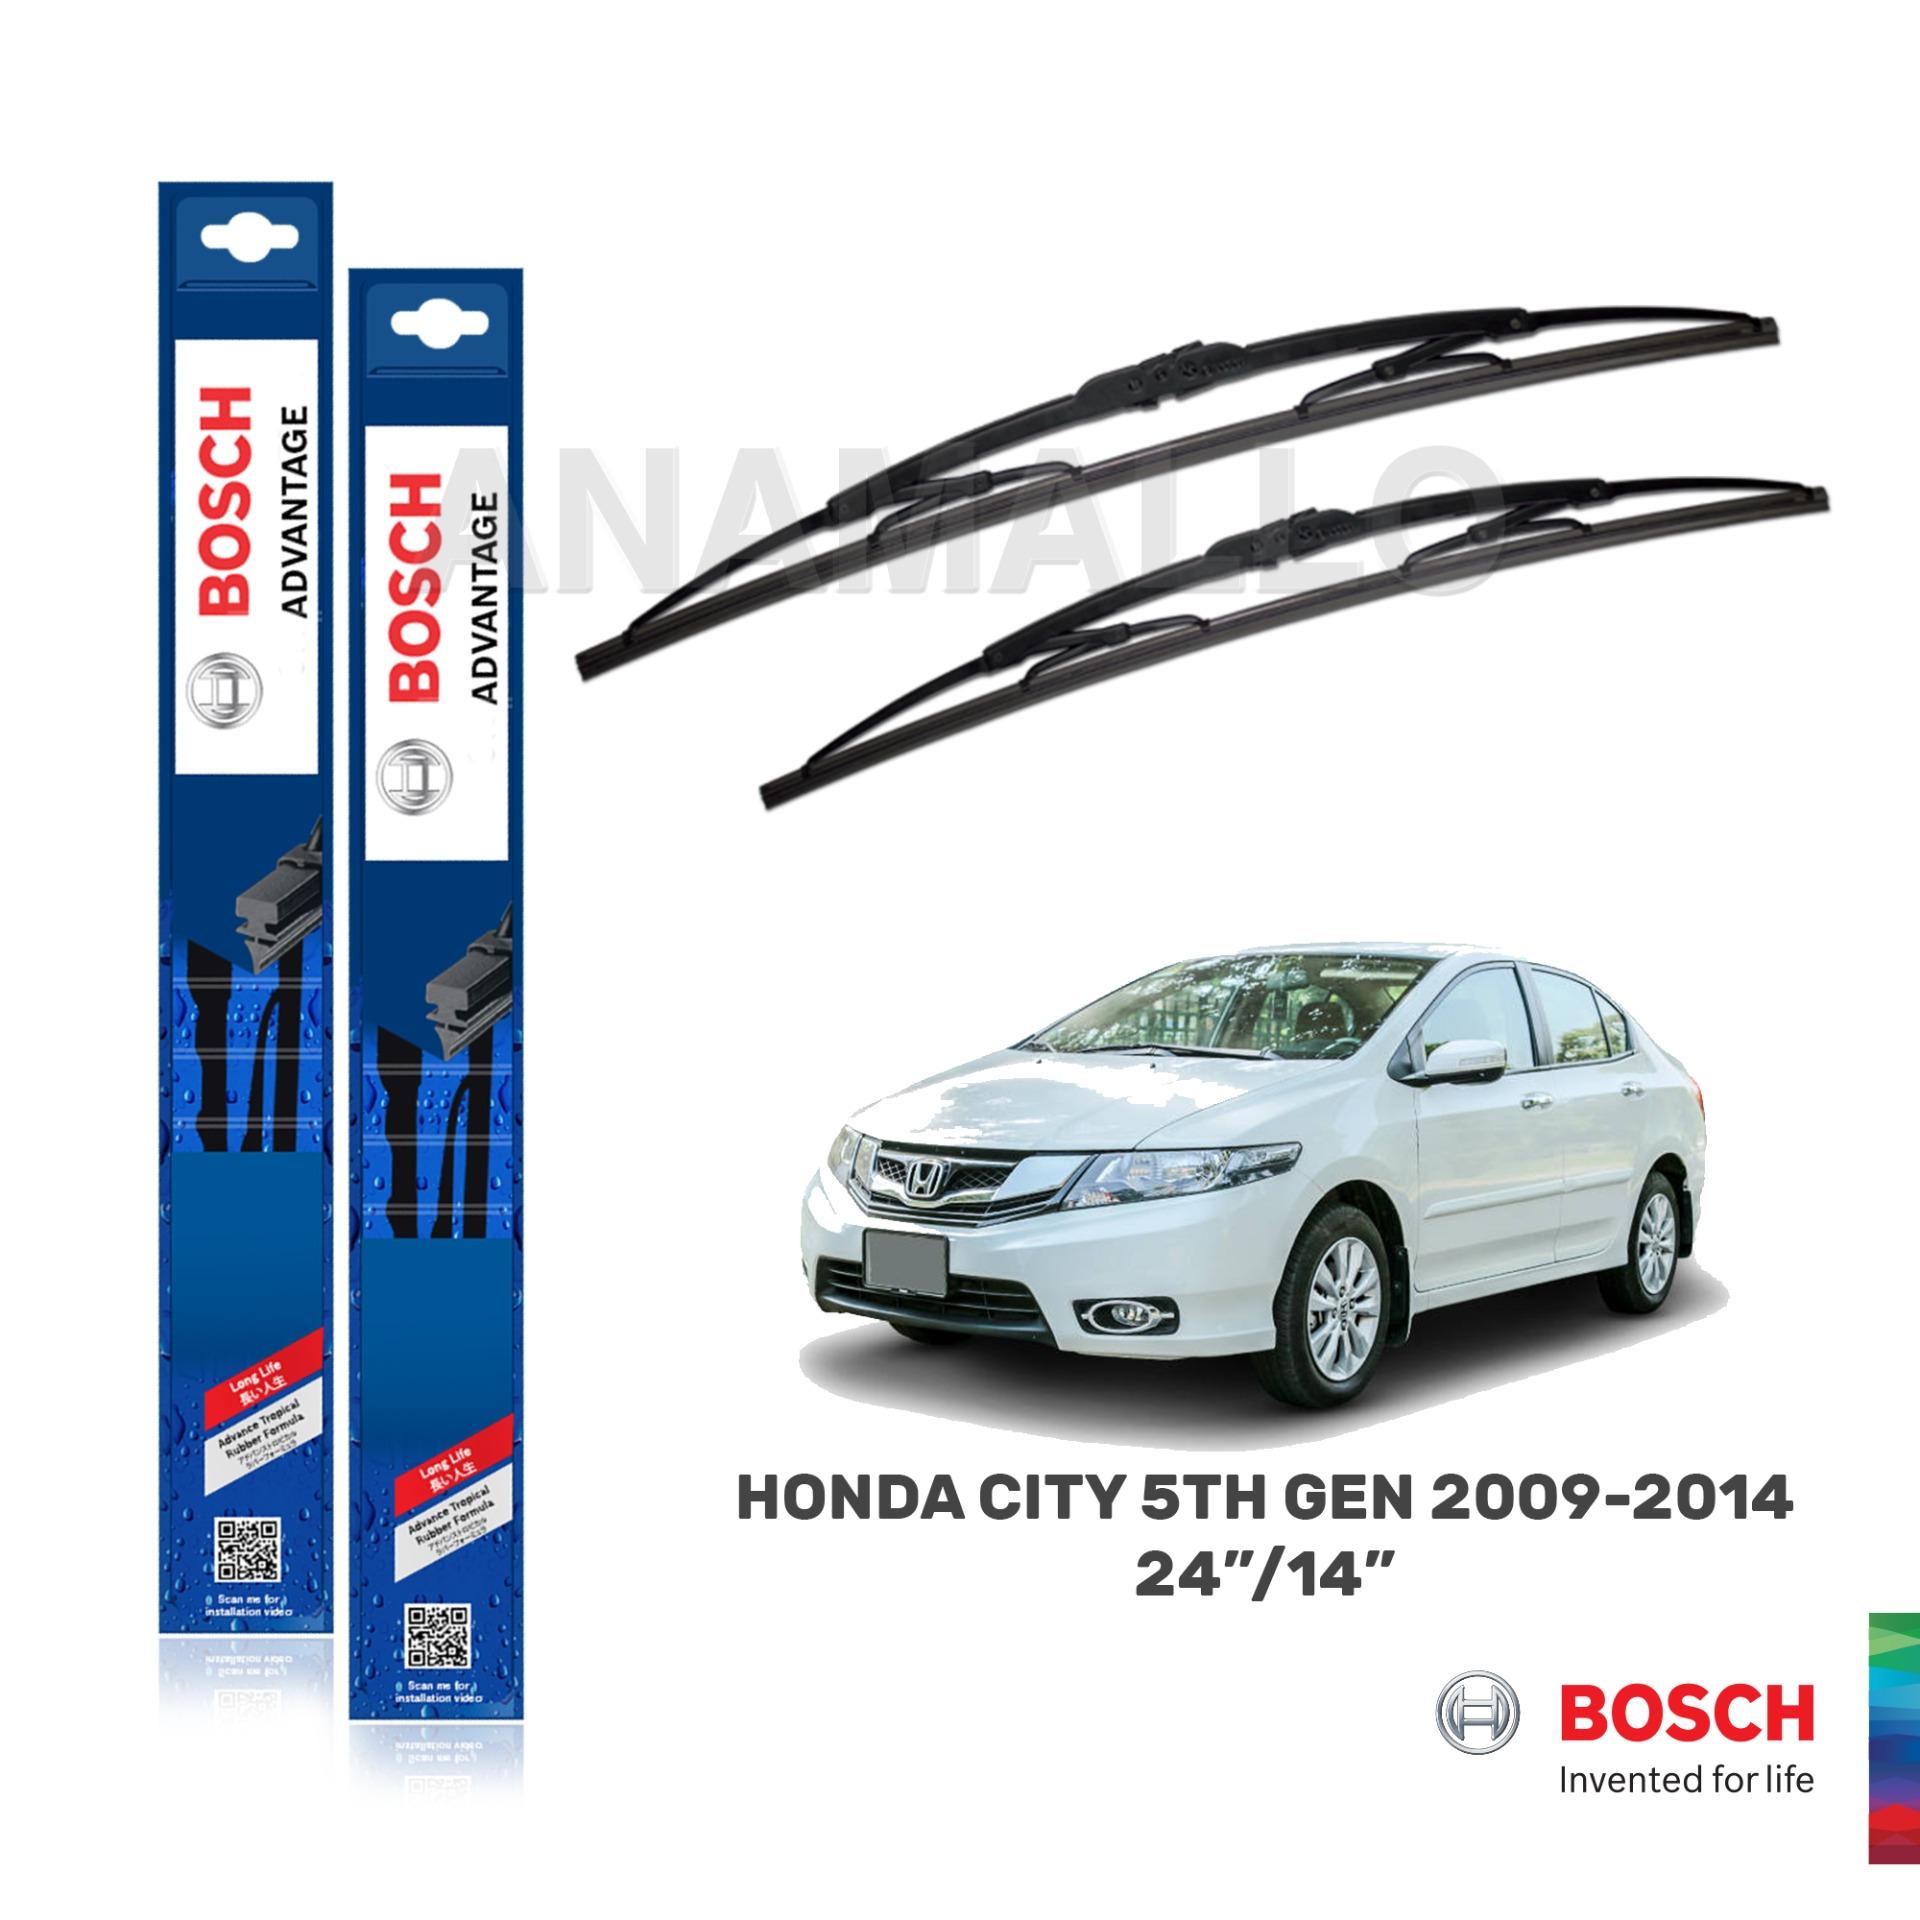 Honda Civic 2015 Windshield Wipers Size - Honda Civic 2015 Honda Civic Lx Windshield Wipers Size